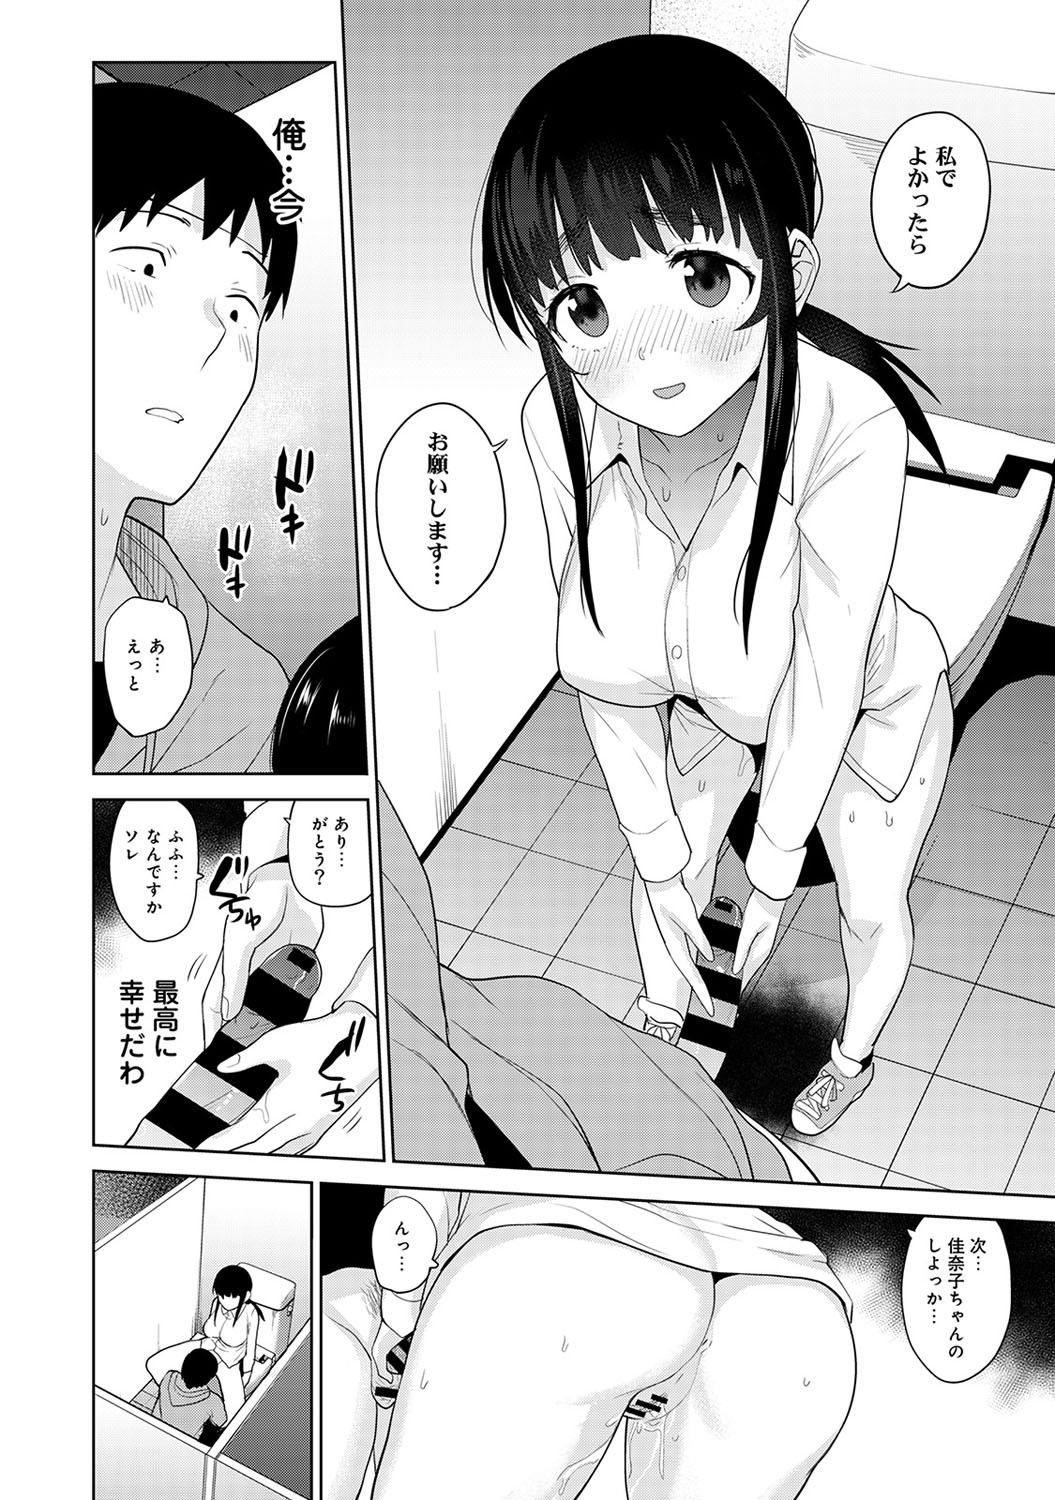 Kawaii Onnanoko o Tsuru Houhou 2 - Method to catch a pretty girl 2 42